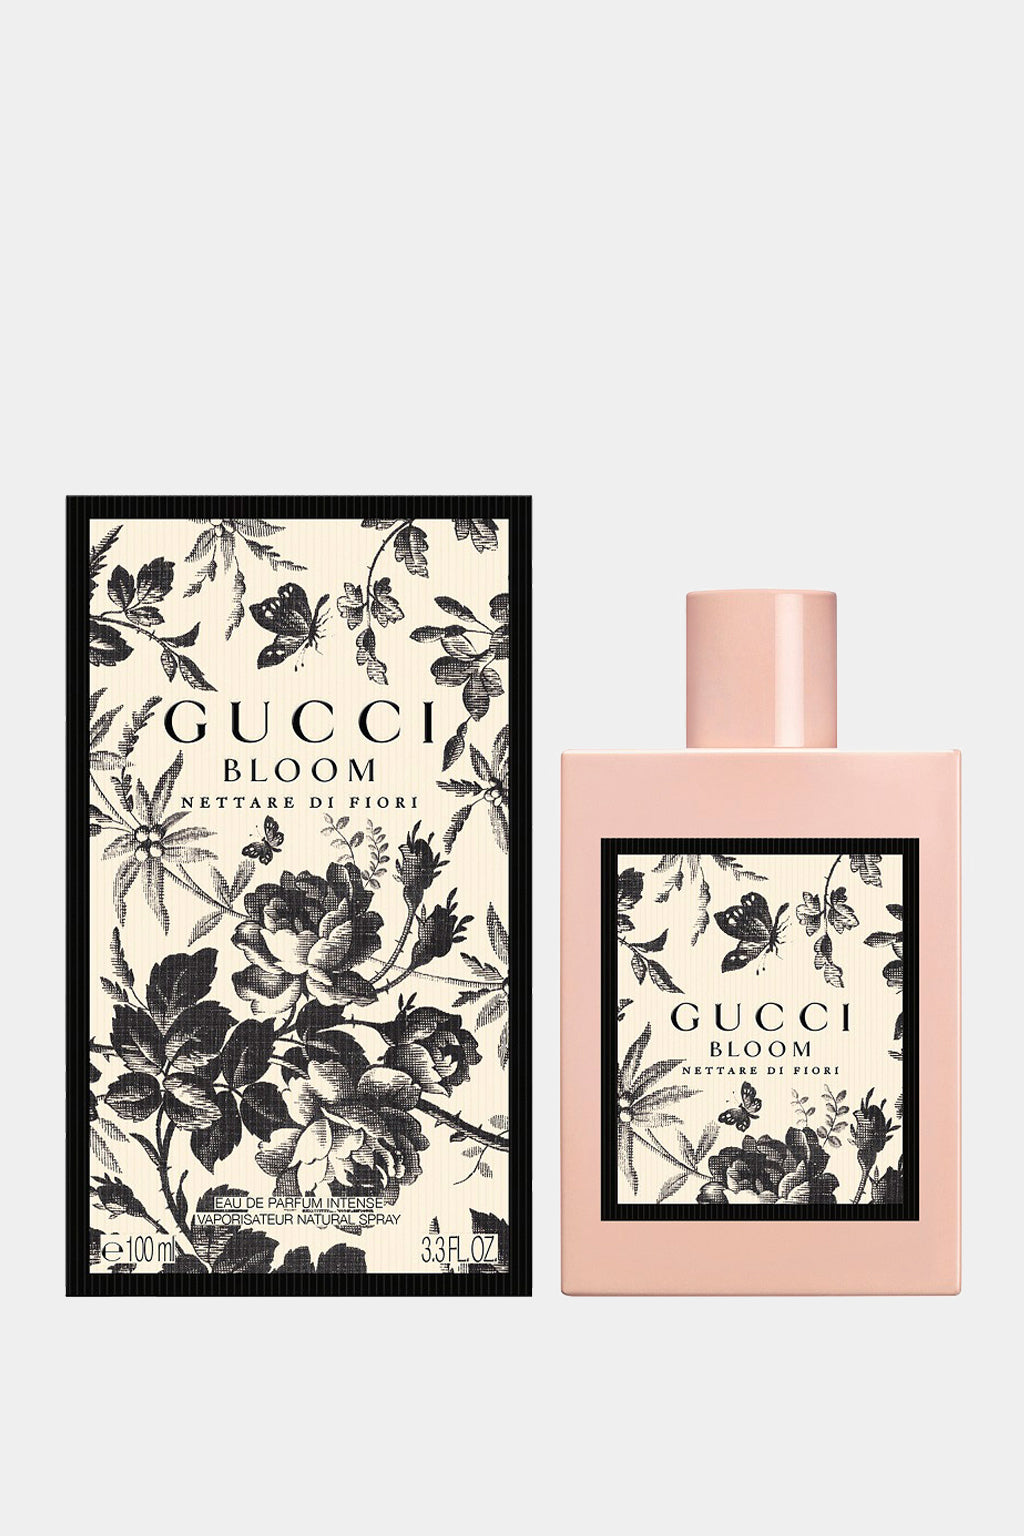 Gucci - Bloom Nettare Di Fiori For Women Eau De Parfum 100ML